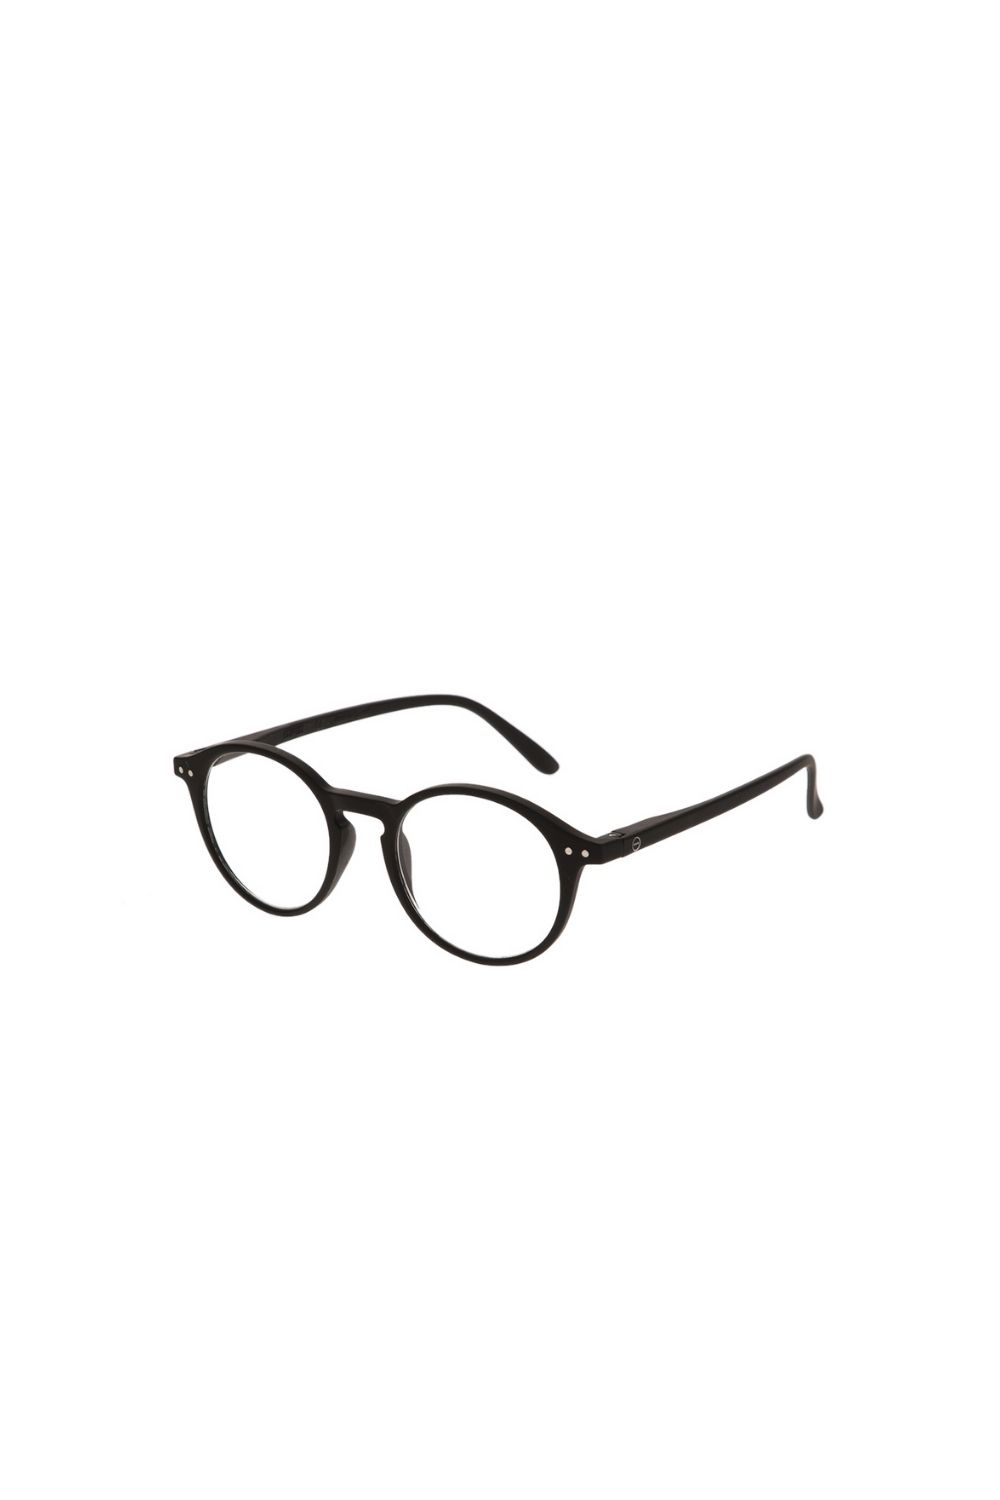 IZIPIZI - Unisex γυαλιά οράσεως IZIPIZI READING #D μαύρα Γυναικεία/Αξεσουάρ/Γυαλιά/Οράσεως